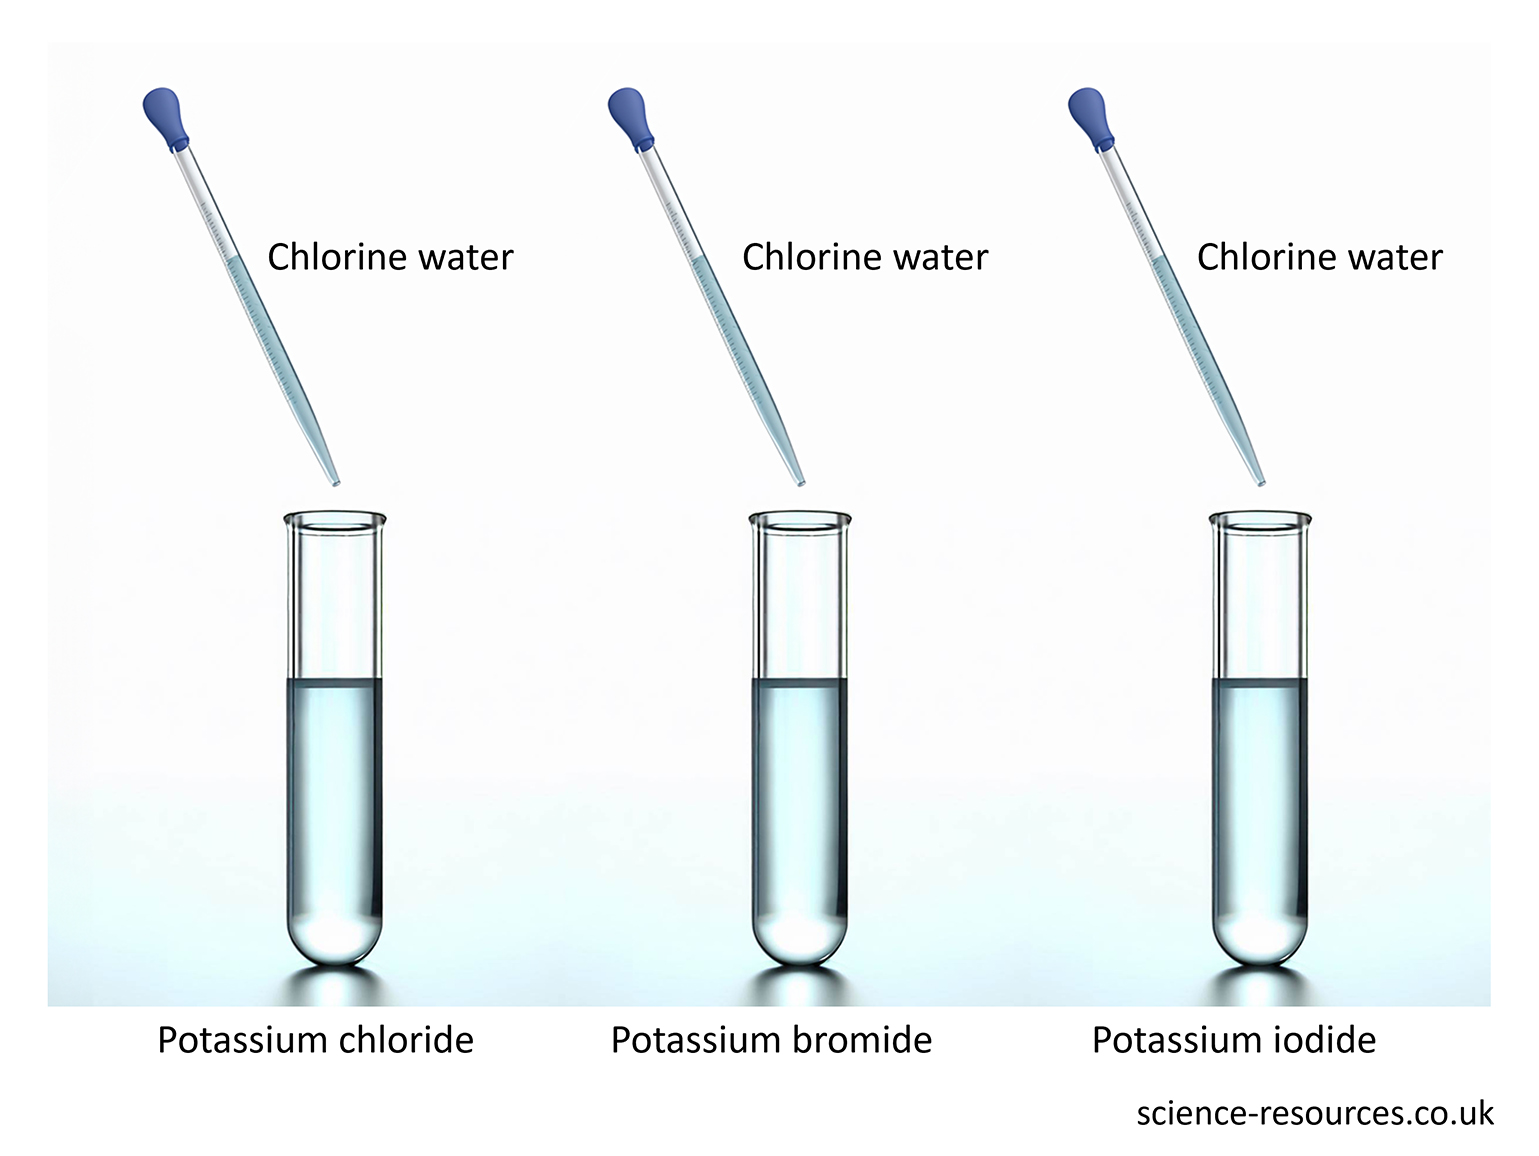 The results of adding chlorine to three different solutions: potassium chloride, potassium bromide, and potassium iodide.